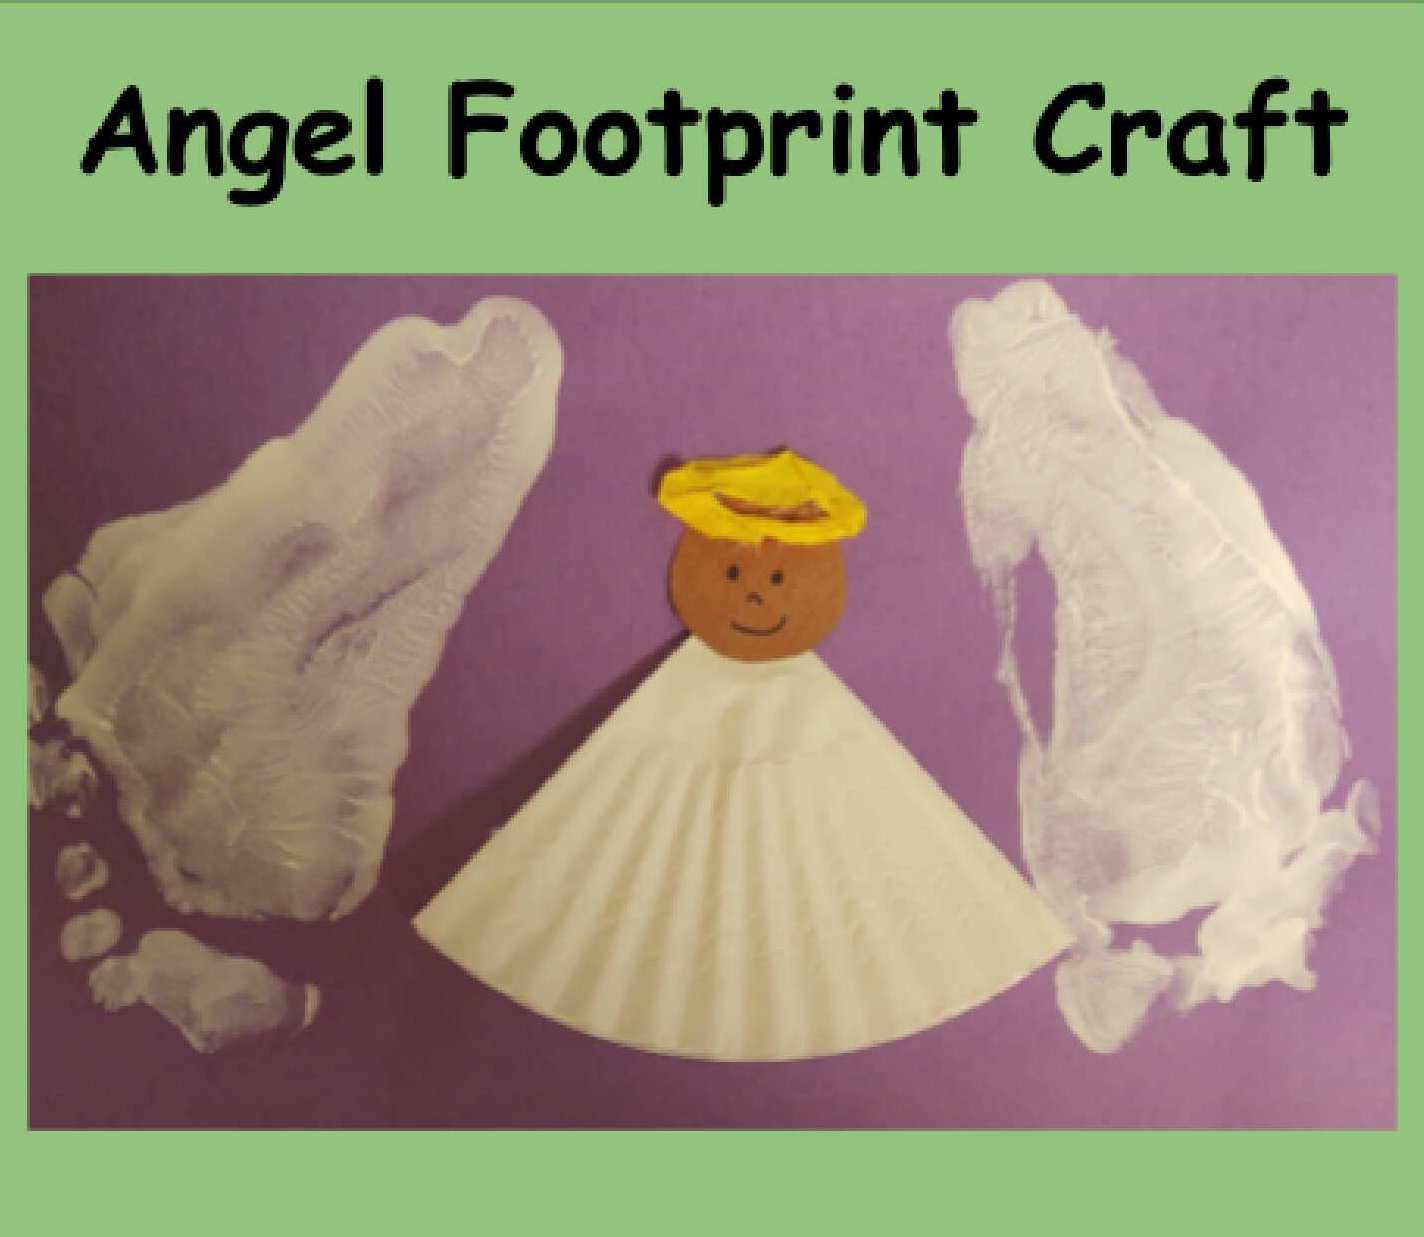 angel footprint craft with Psalm 91:11 verse